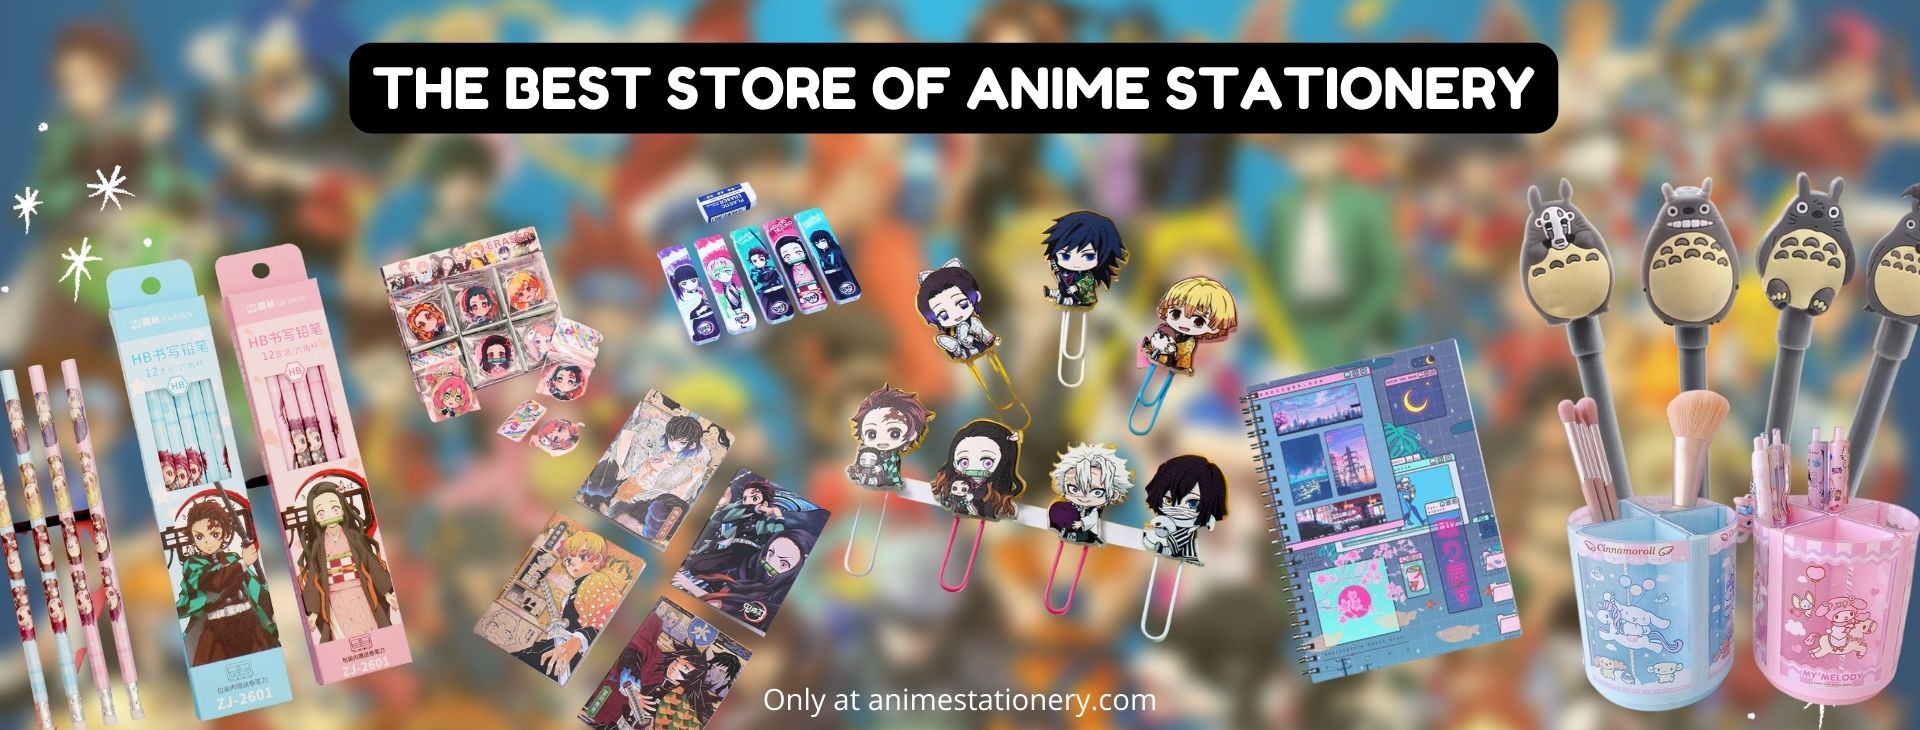 anime stationery Banner - Anime Stationery